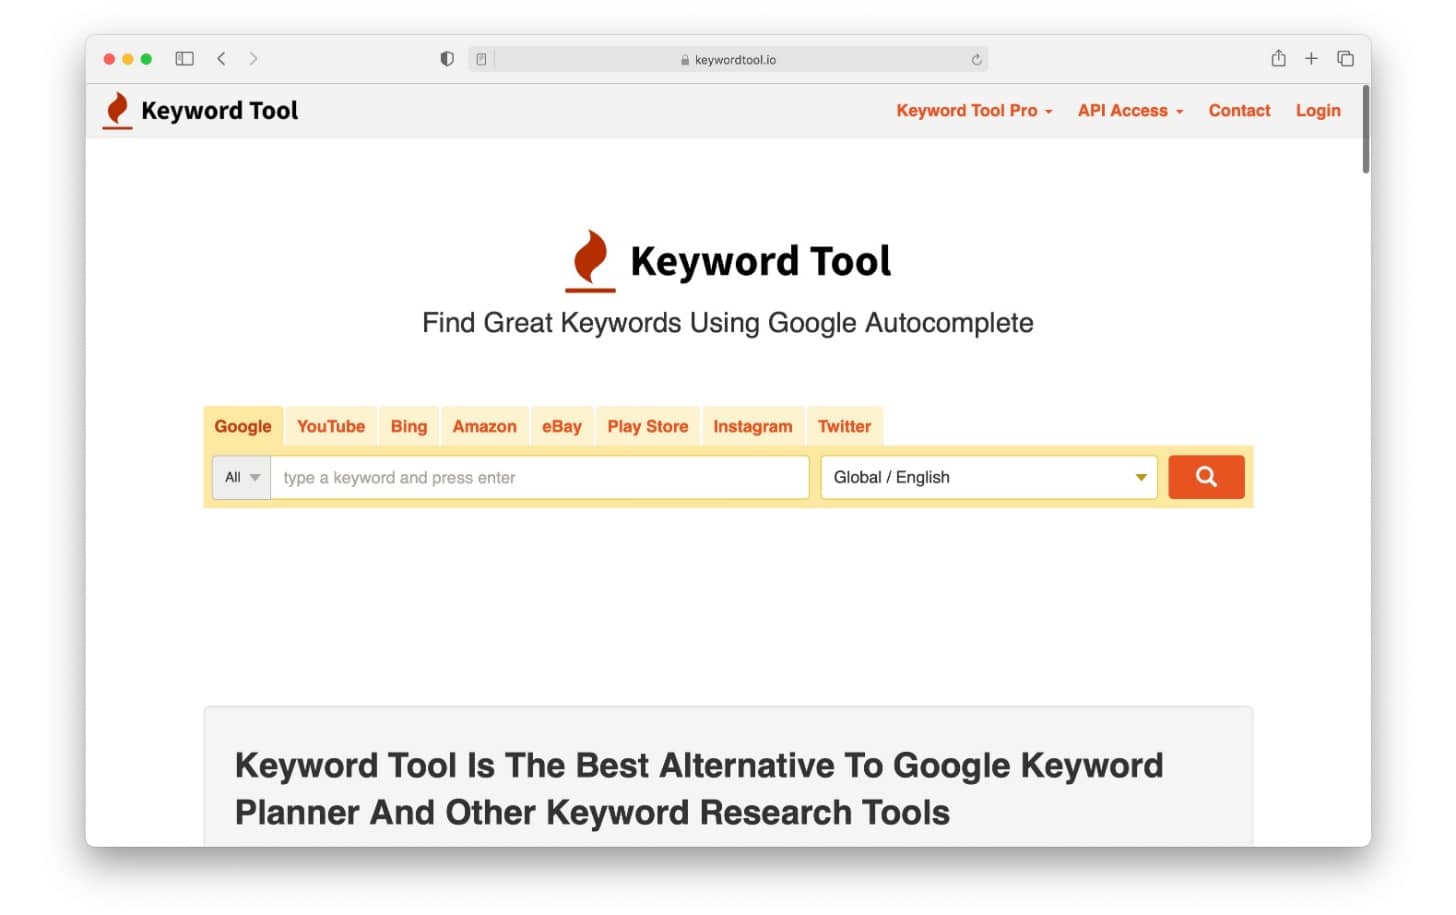 Keyword Tool is an SEO tool for keyword research